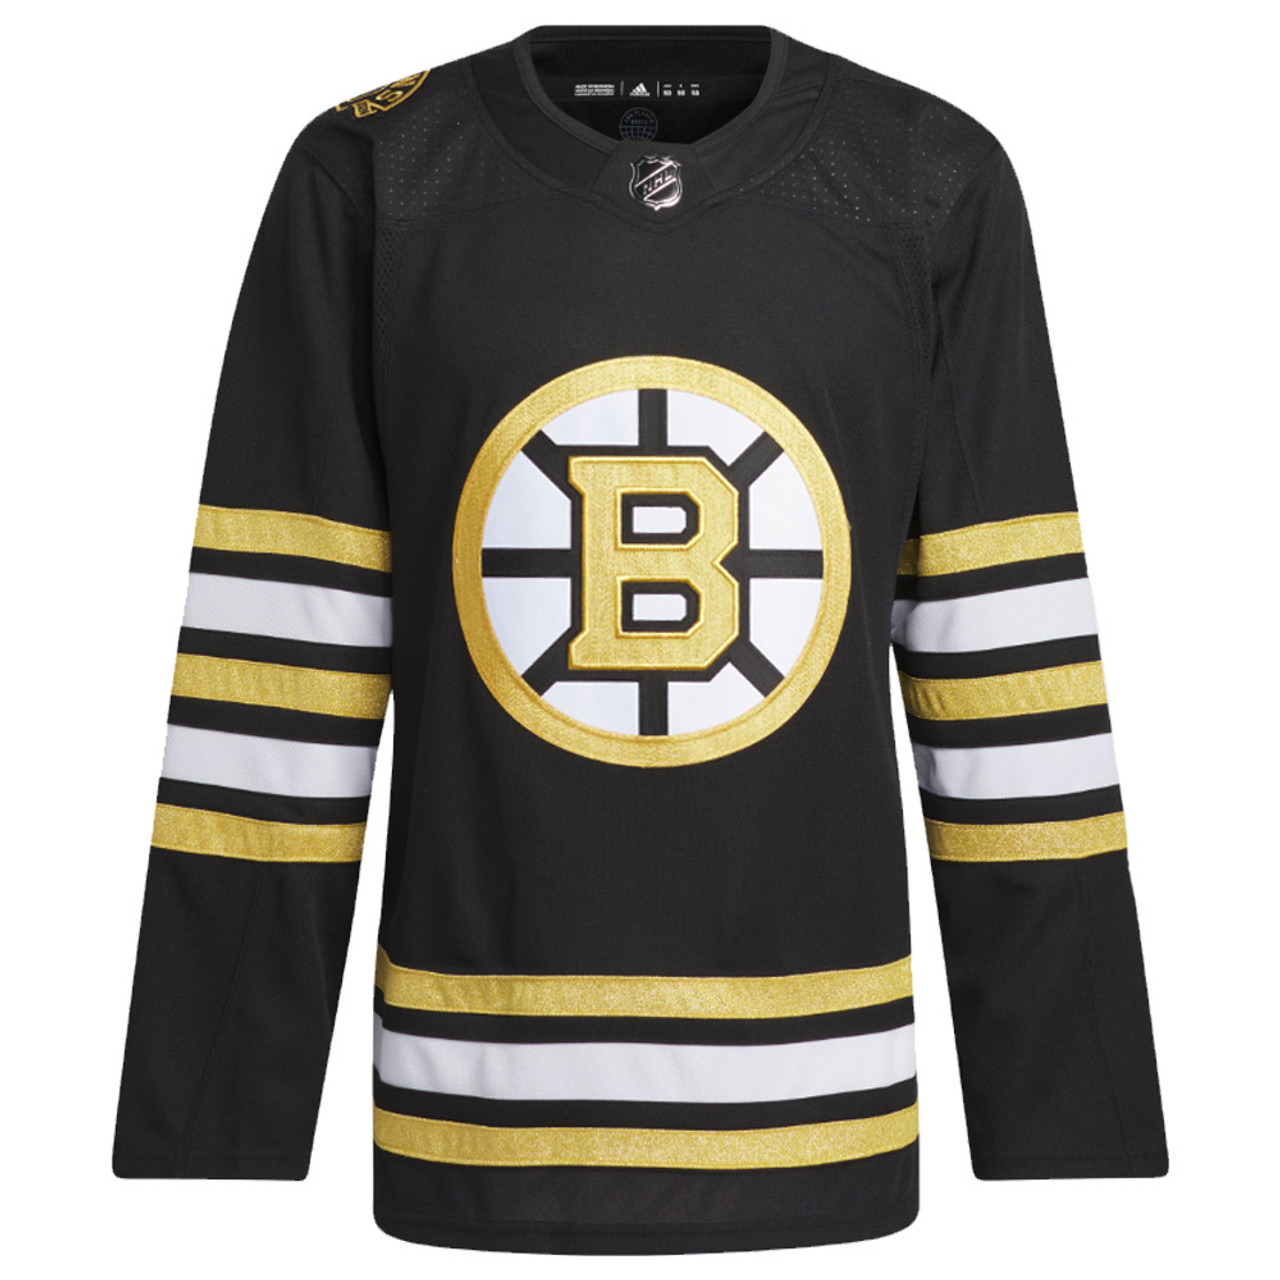 Adidas Boston Bruins NHL Jersey Team Autographed - Large Black